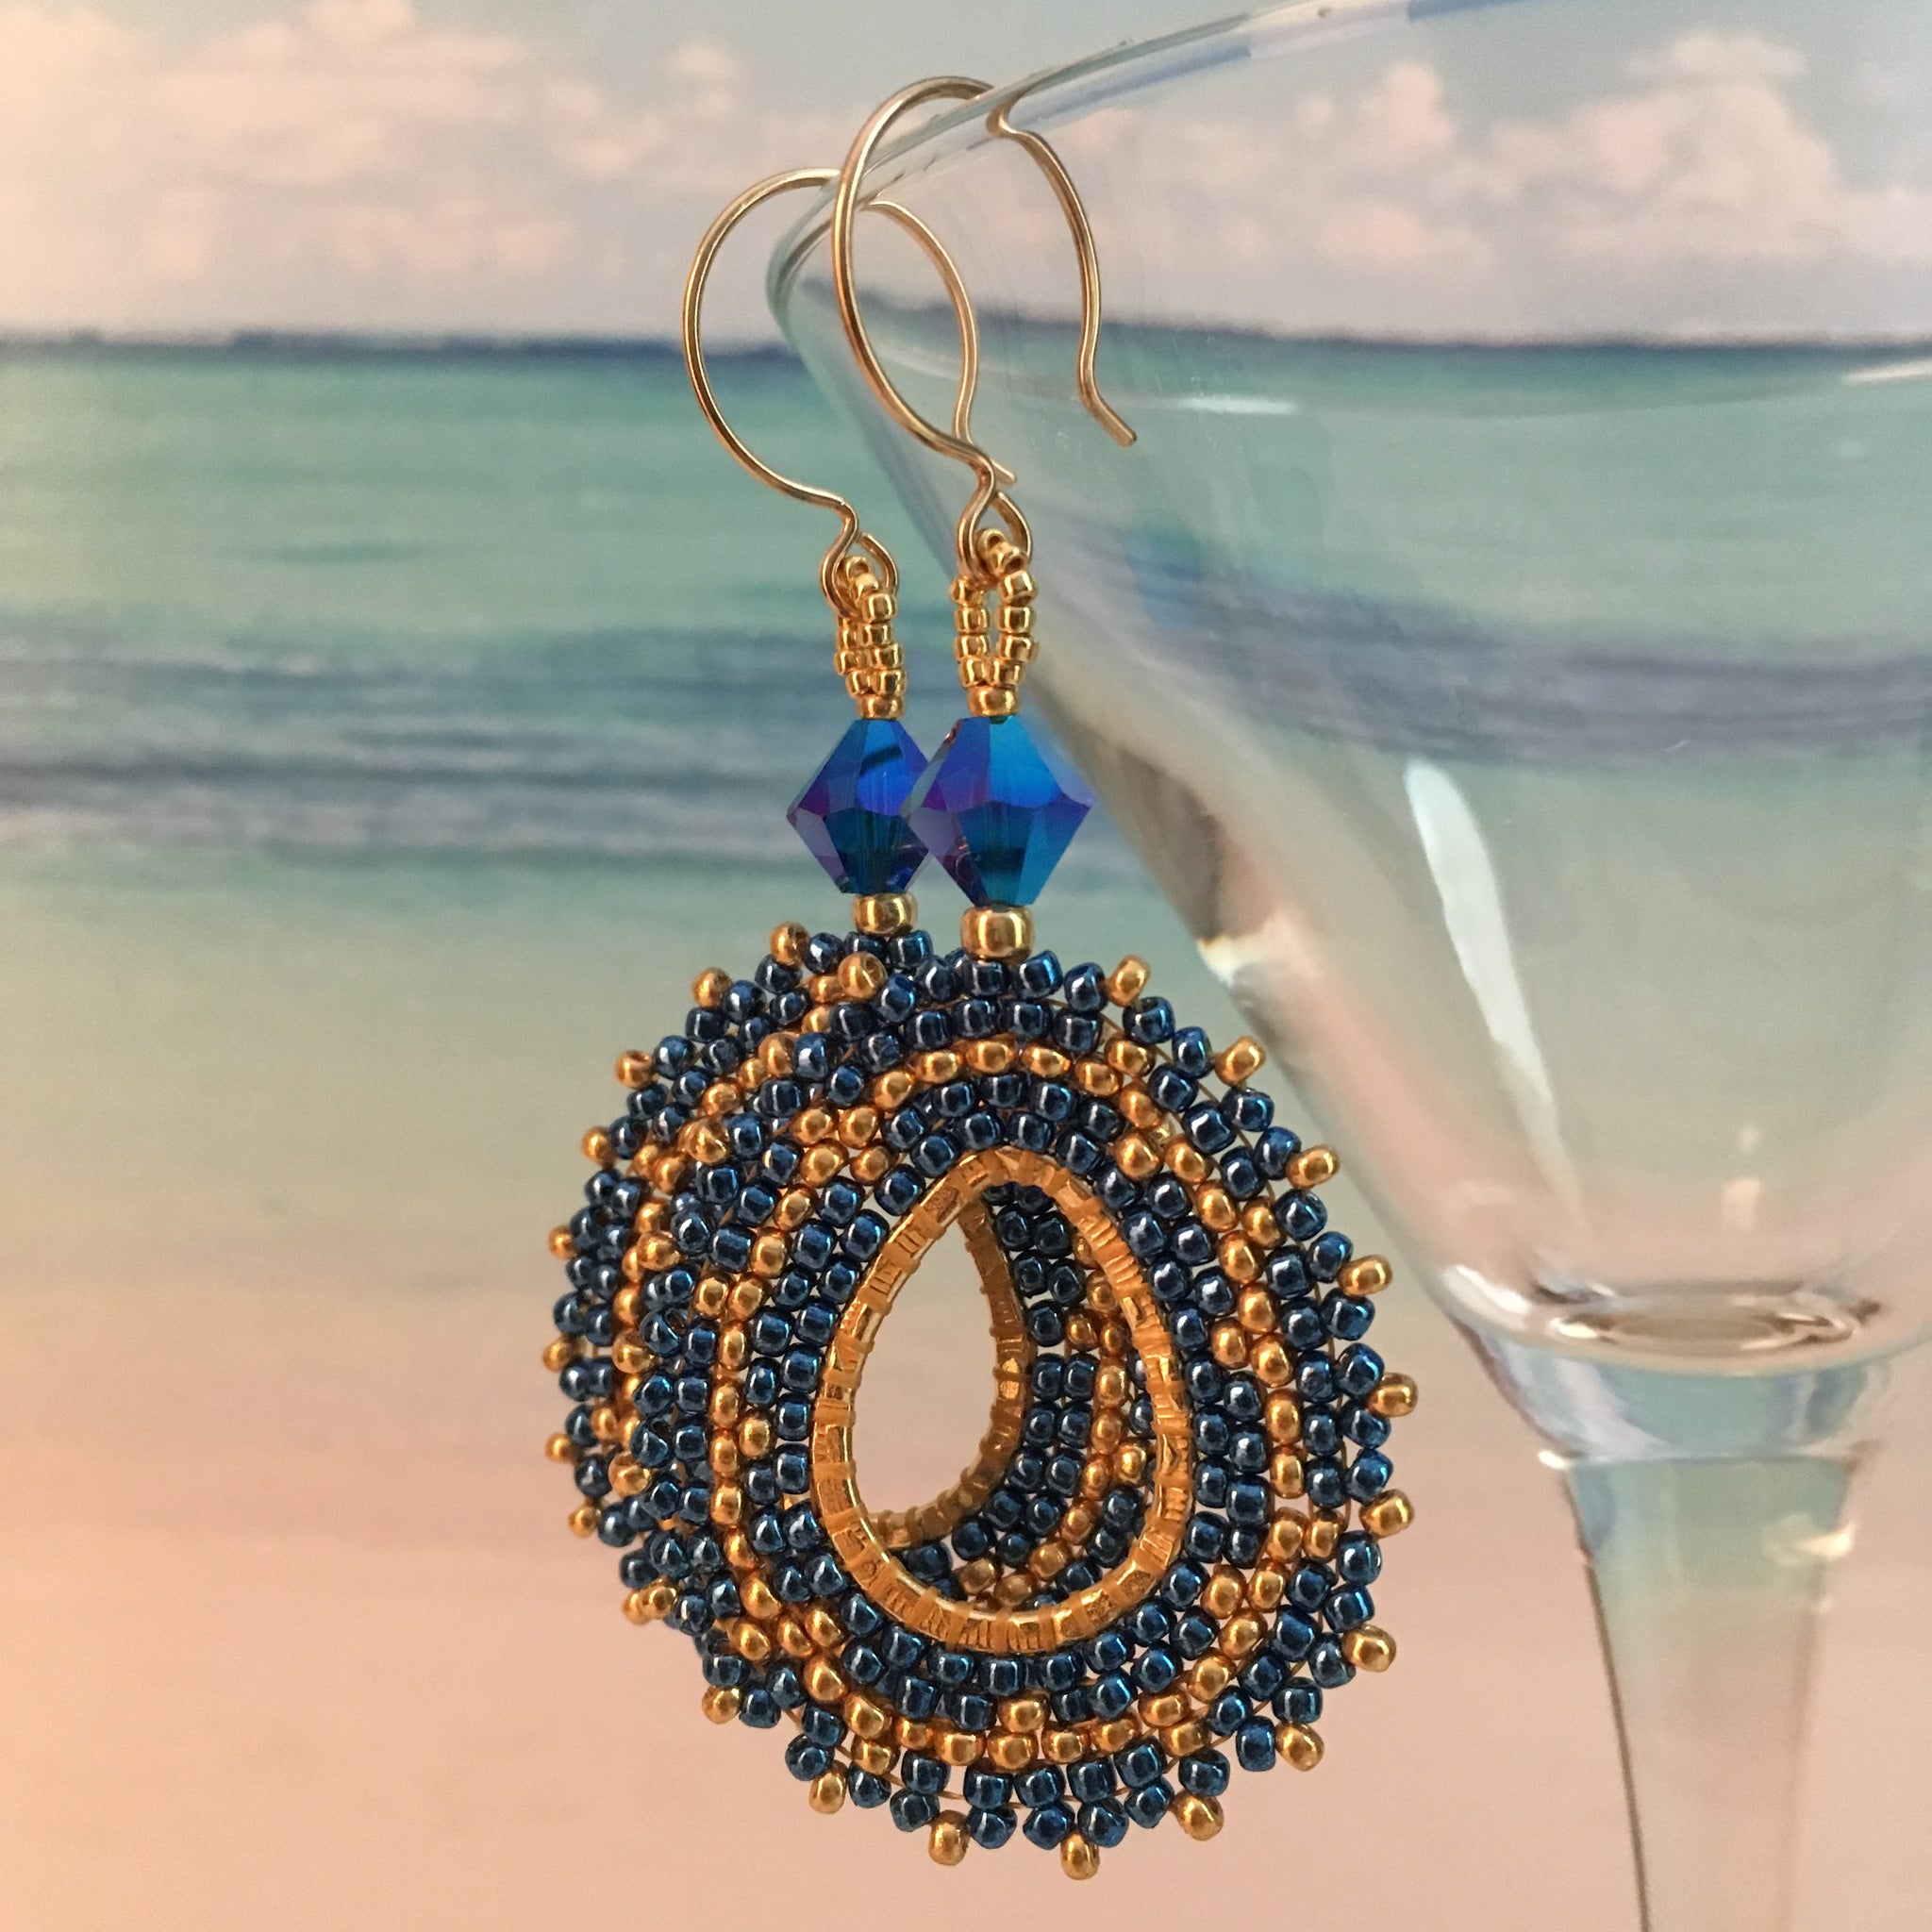 Handmade beaded oval earrings Swarovski crystals Capri blue gold 14K gold filled original design elegant bridal party prom beaded by the beach